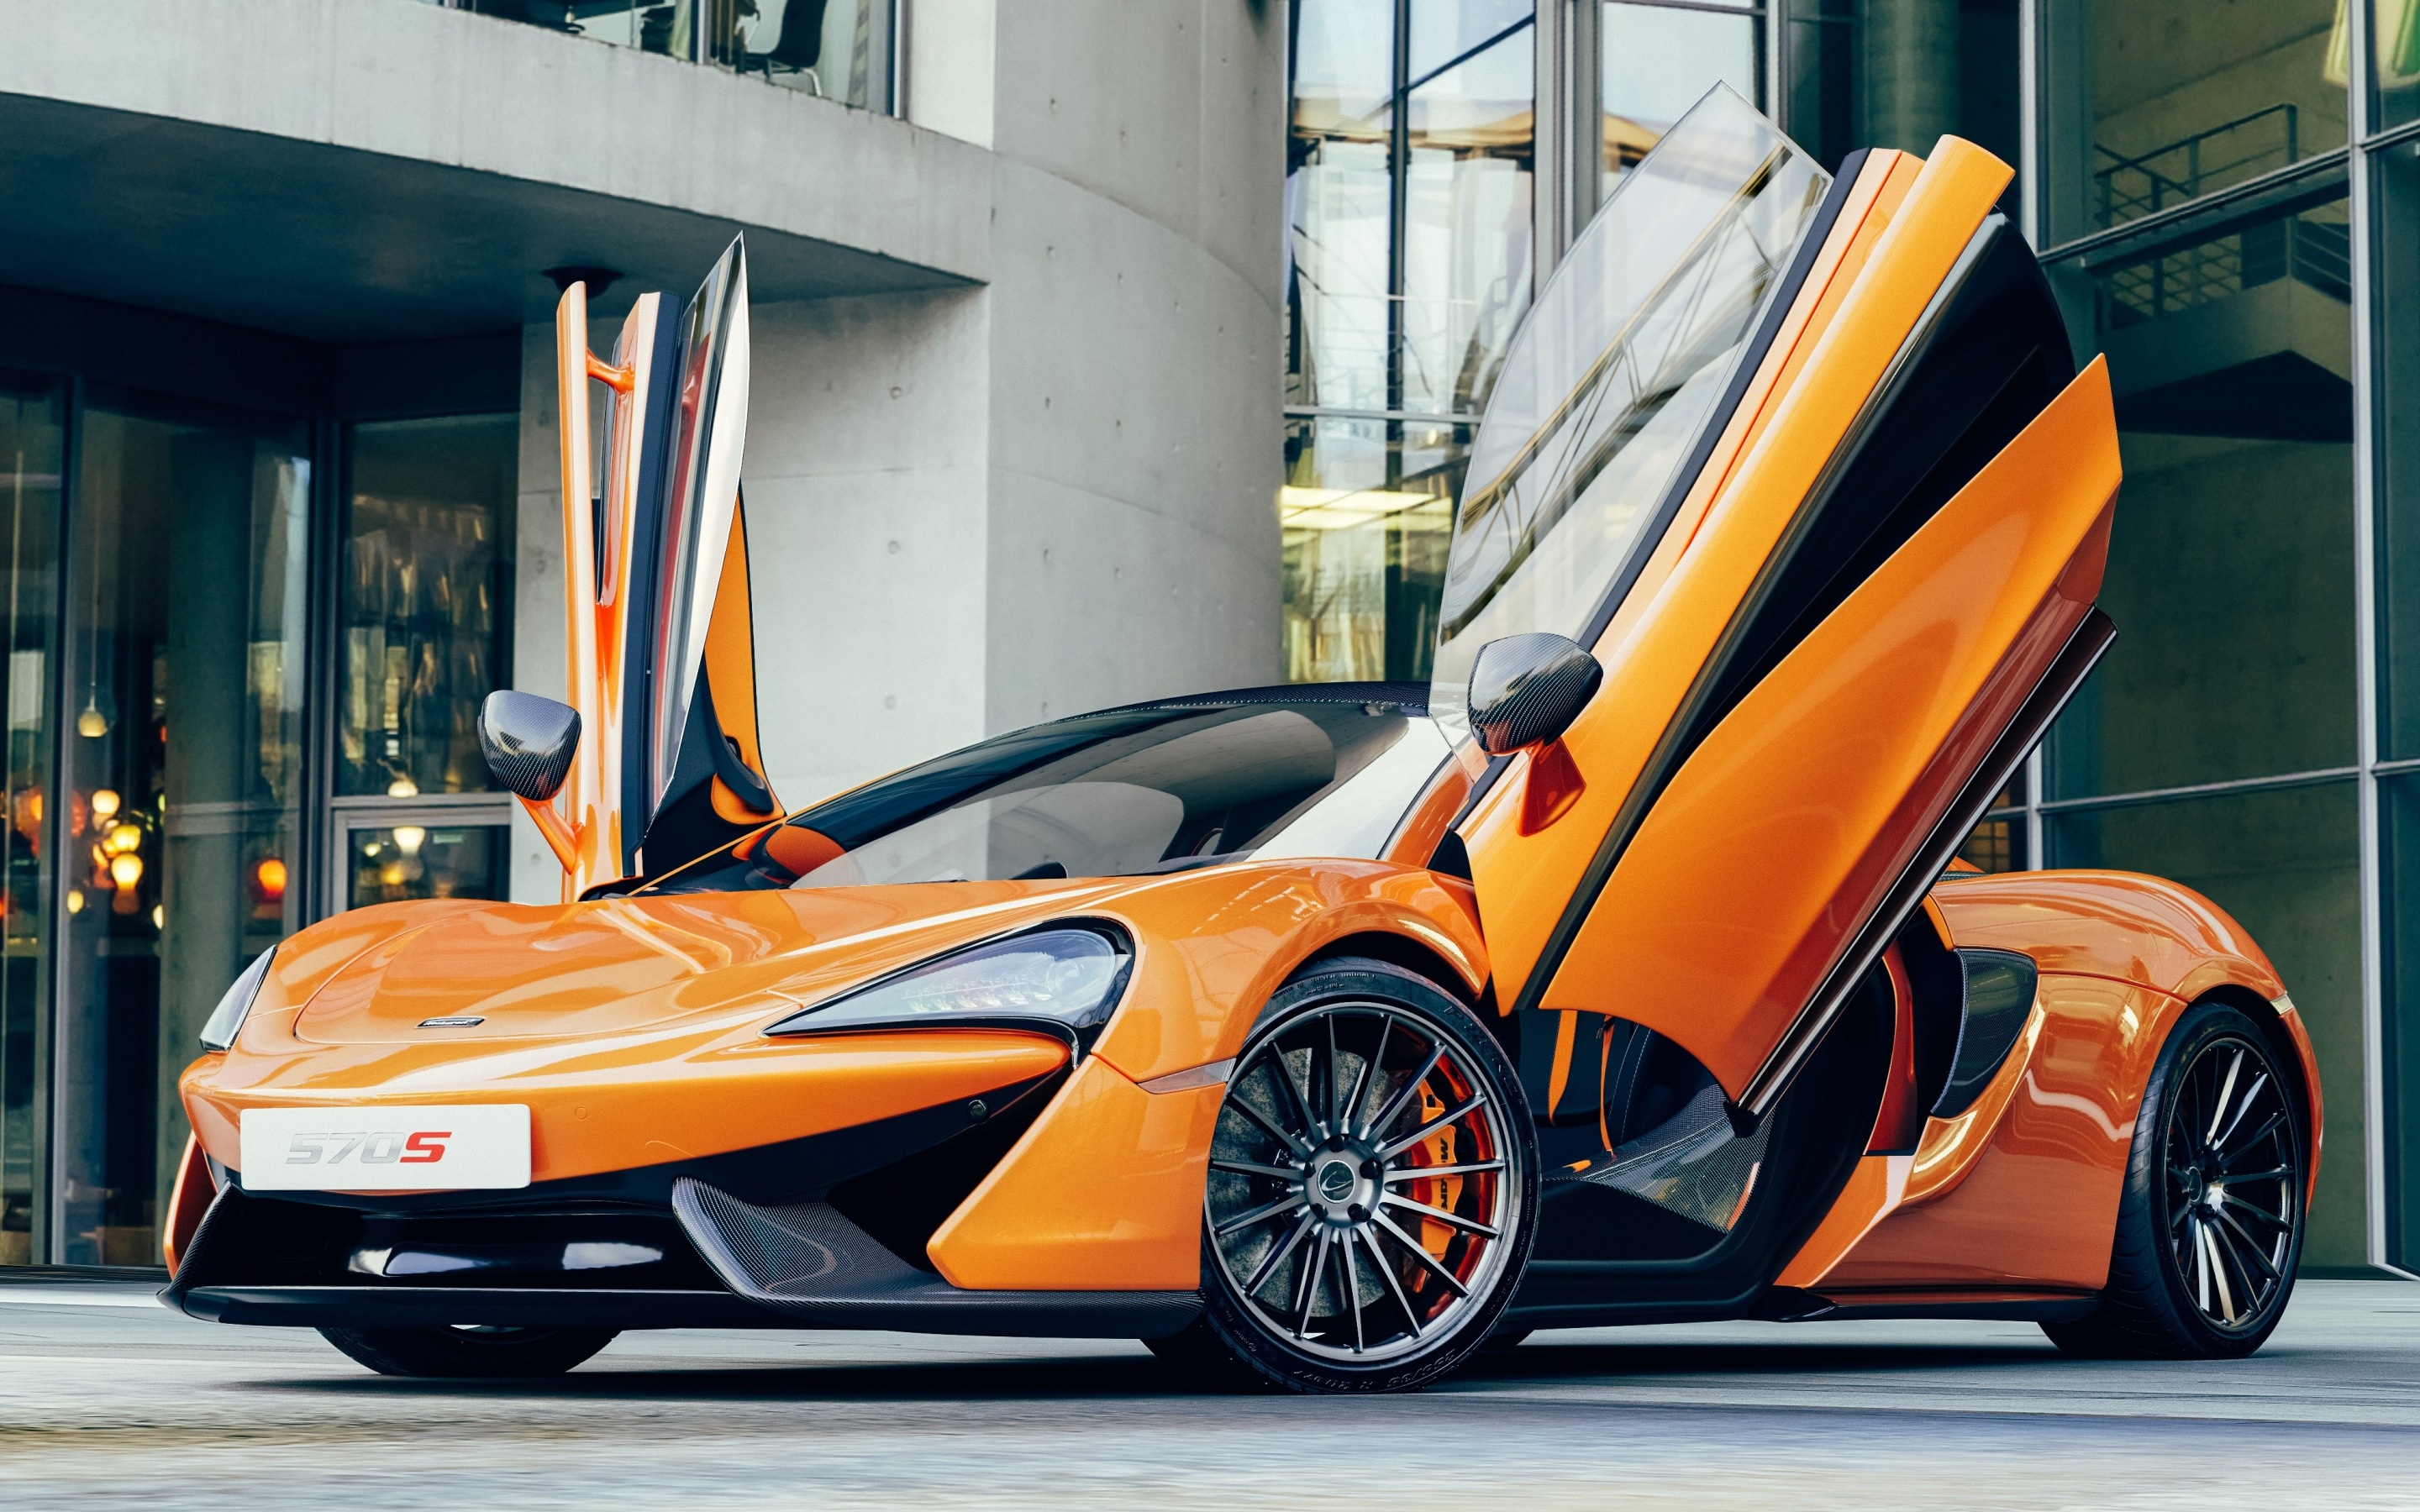 McLaren 570S, Auto racing beauty, British sports coupe, Orange power, 2880x1800 HD Desktop